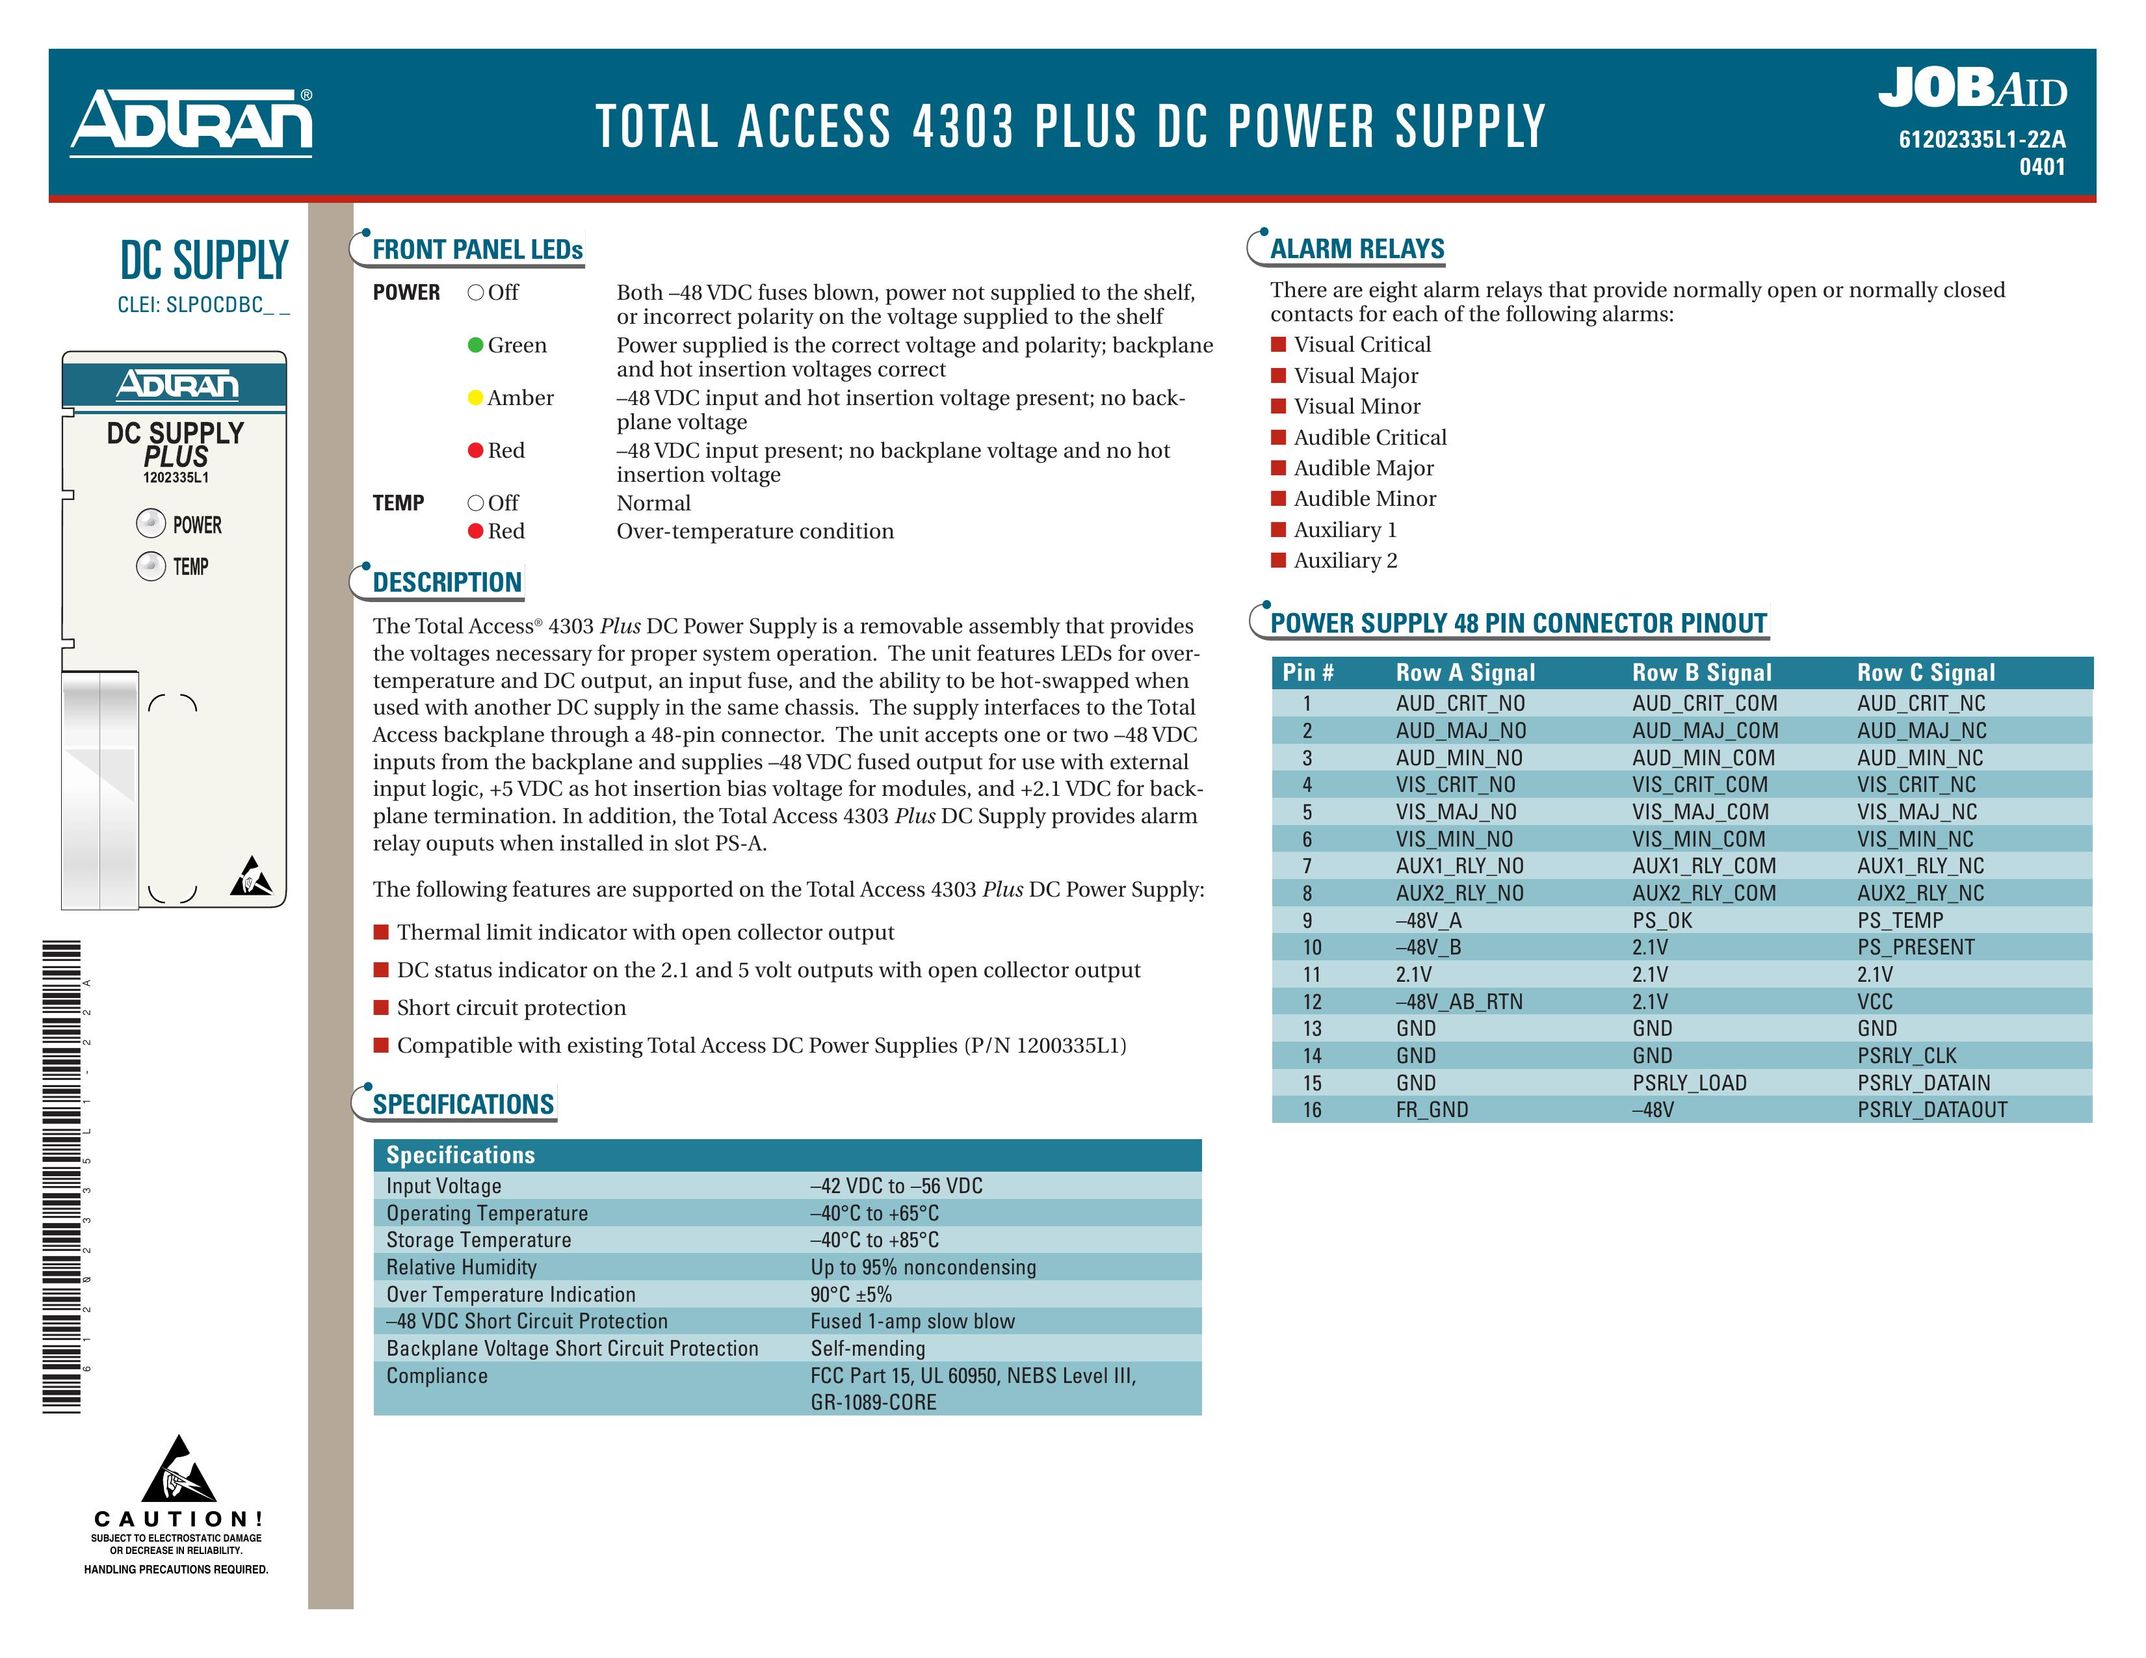 ADTRAN 4303 PLUS Power Supply User Manual